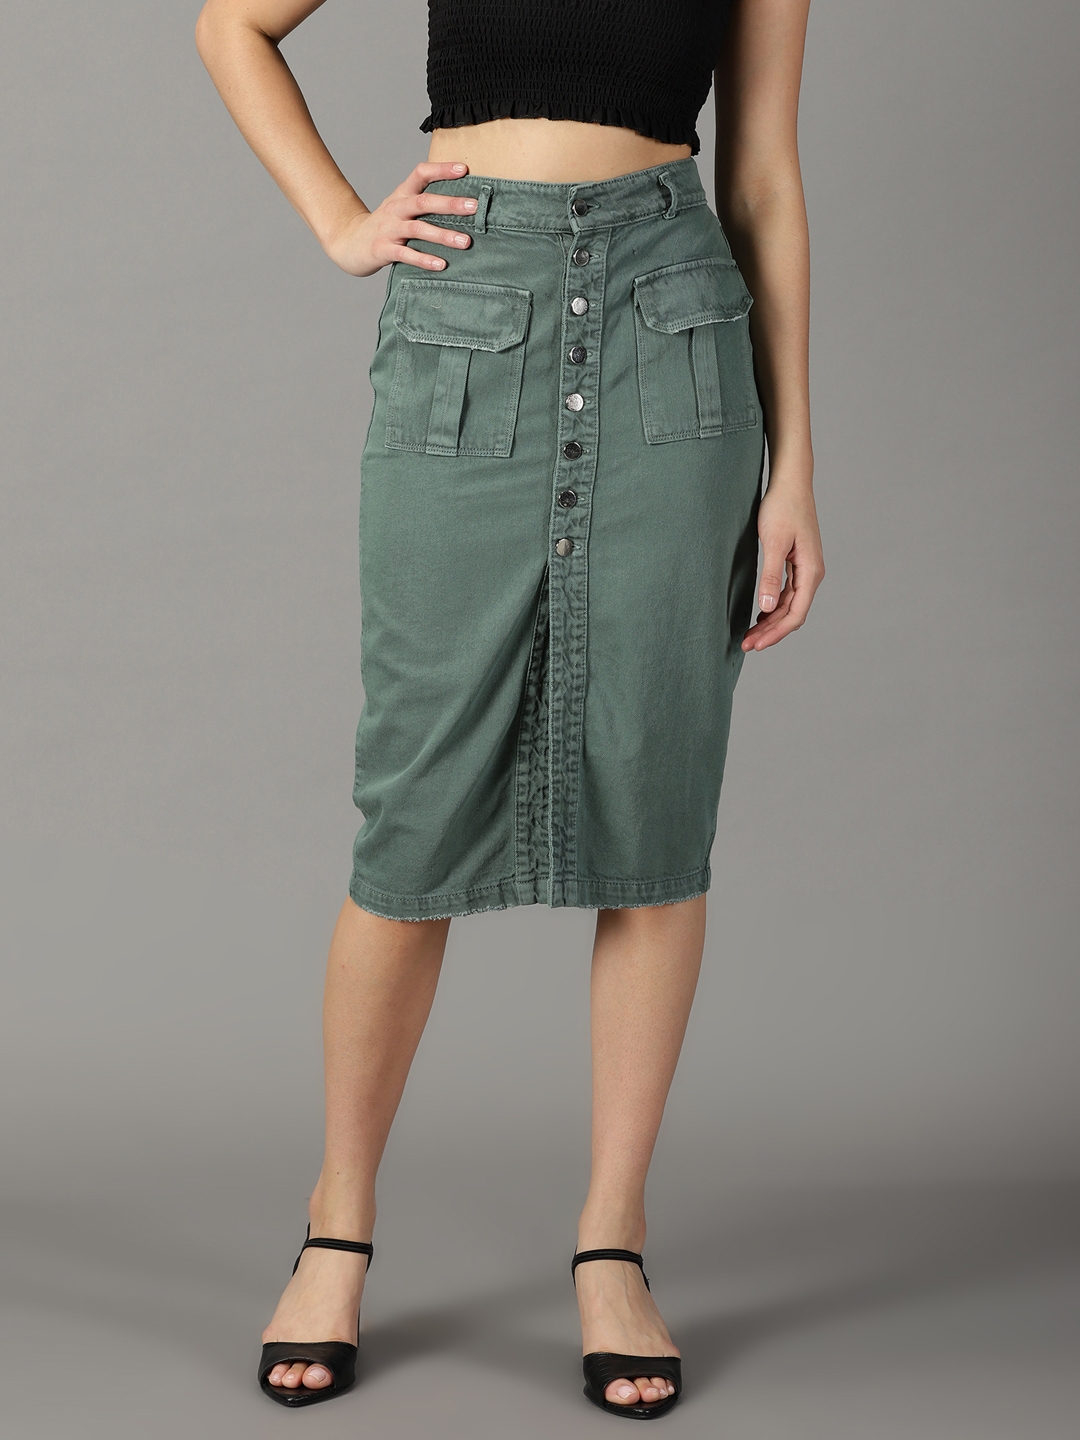 SHOWOFF Women's Solid Green Denim Pencil Skirt